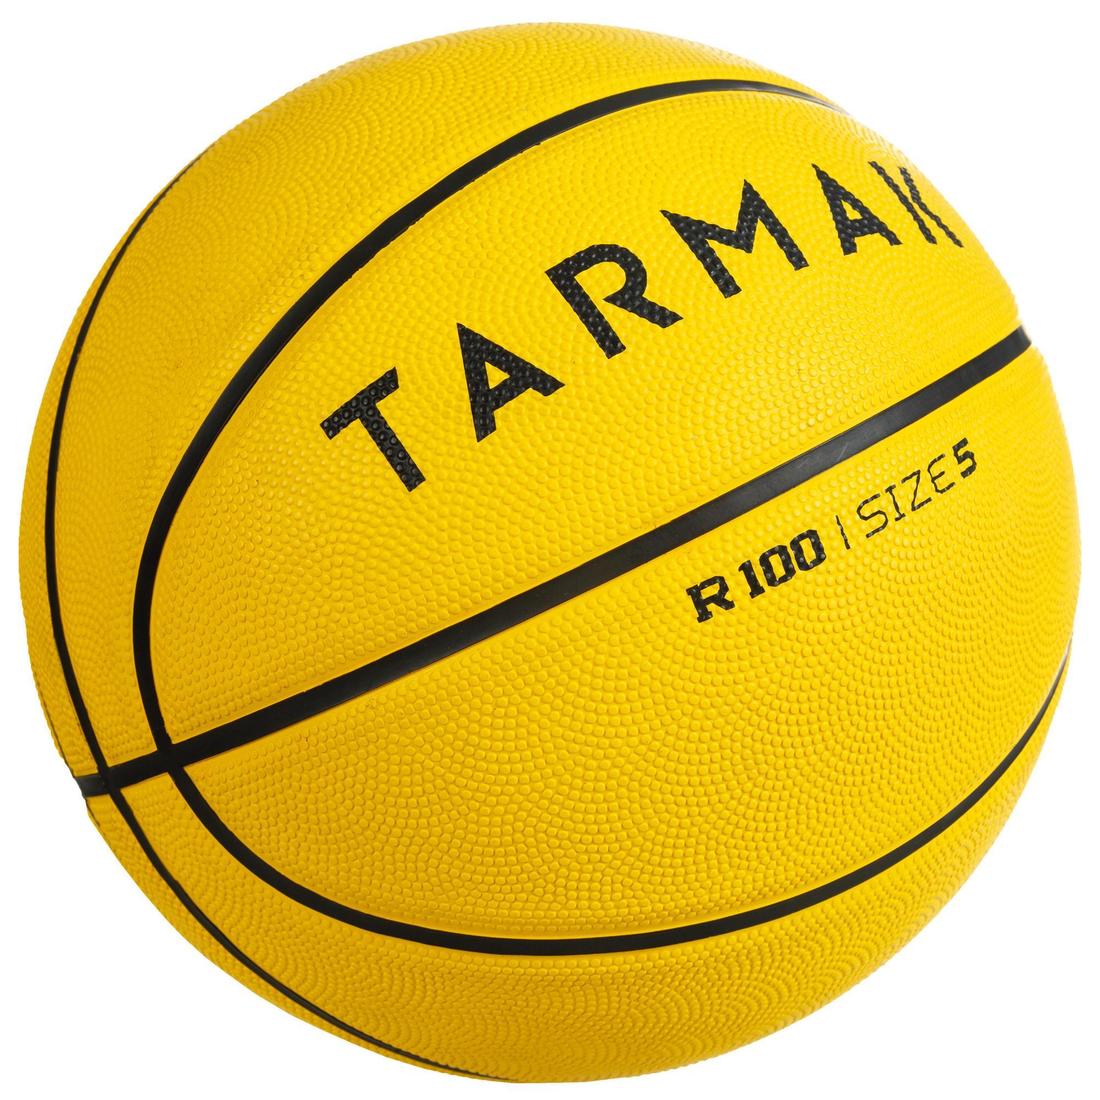 TARMAK(ターマック) バスケットボール 初級向 R100 5号